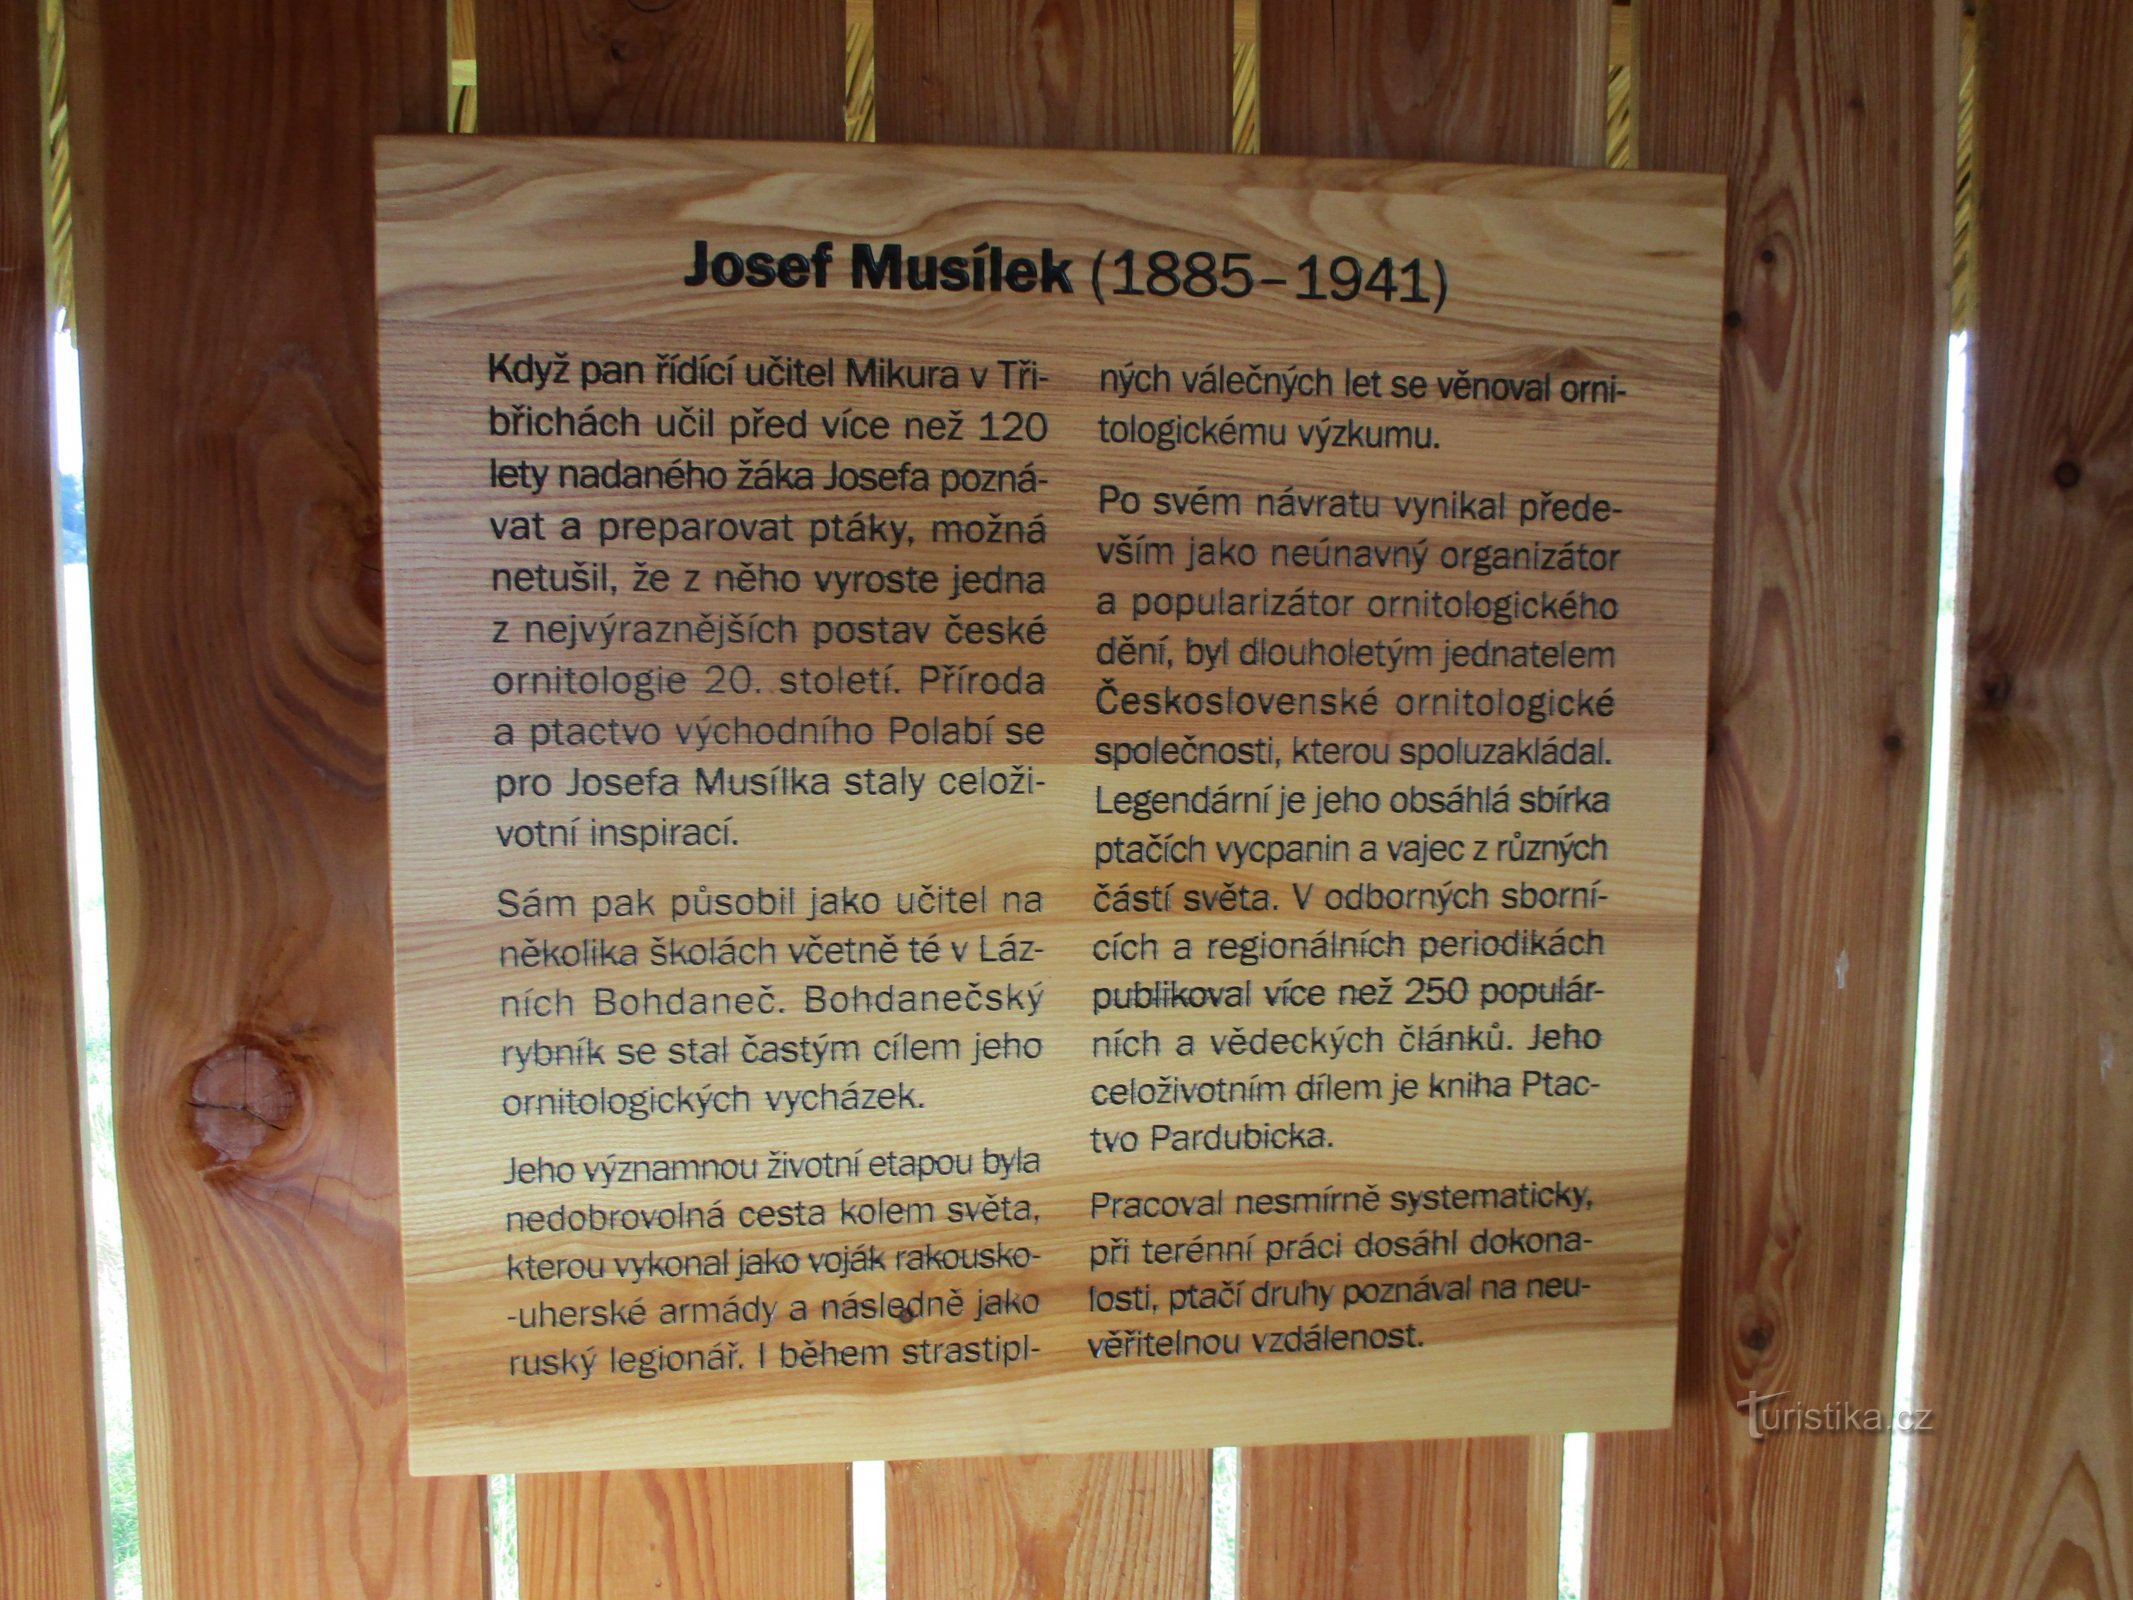 Musílkov-observatorium (Lázně Bohdaneč)